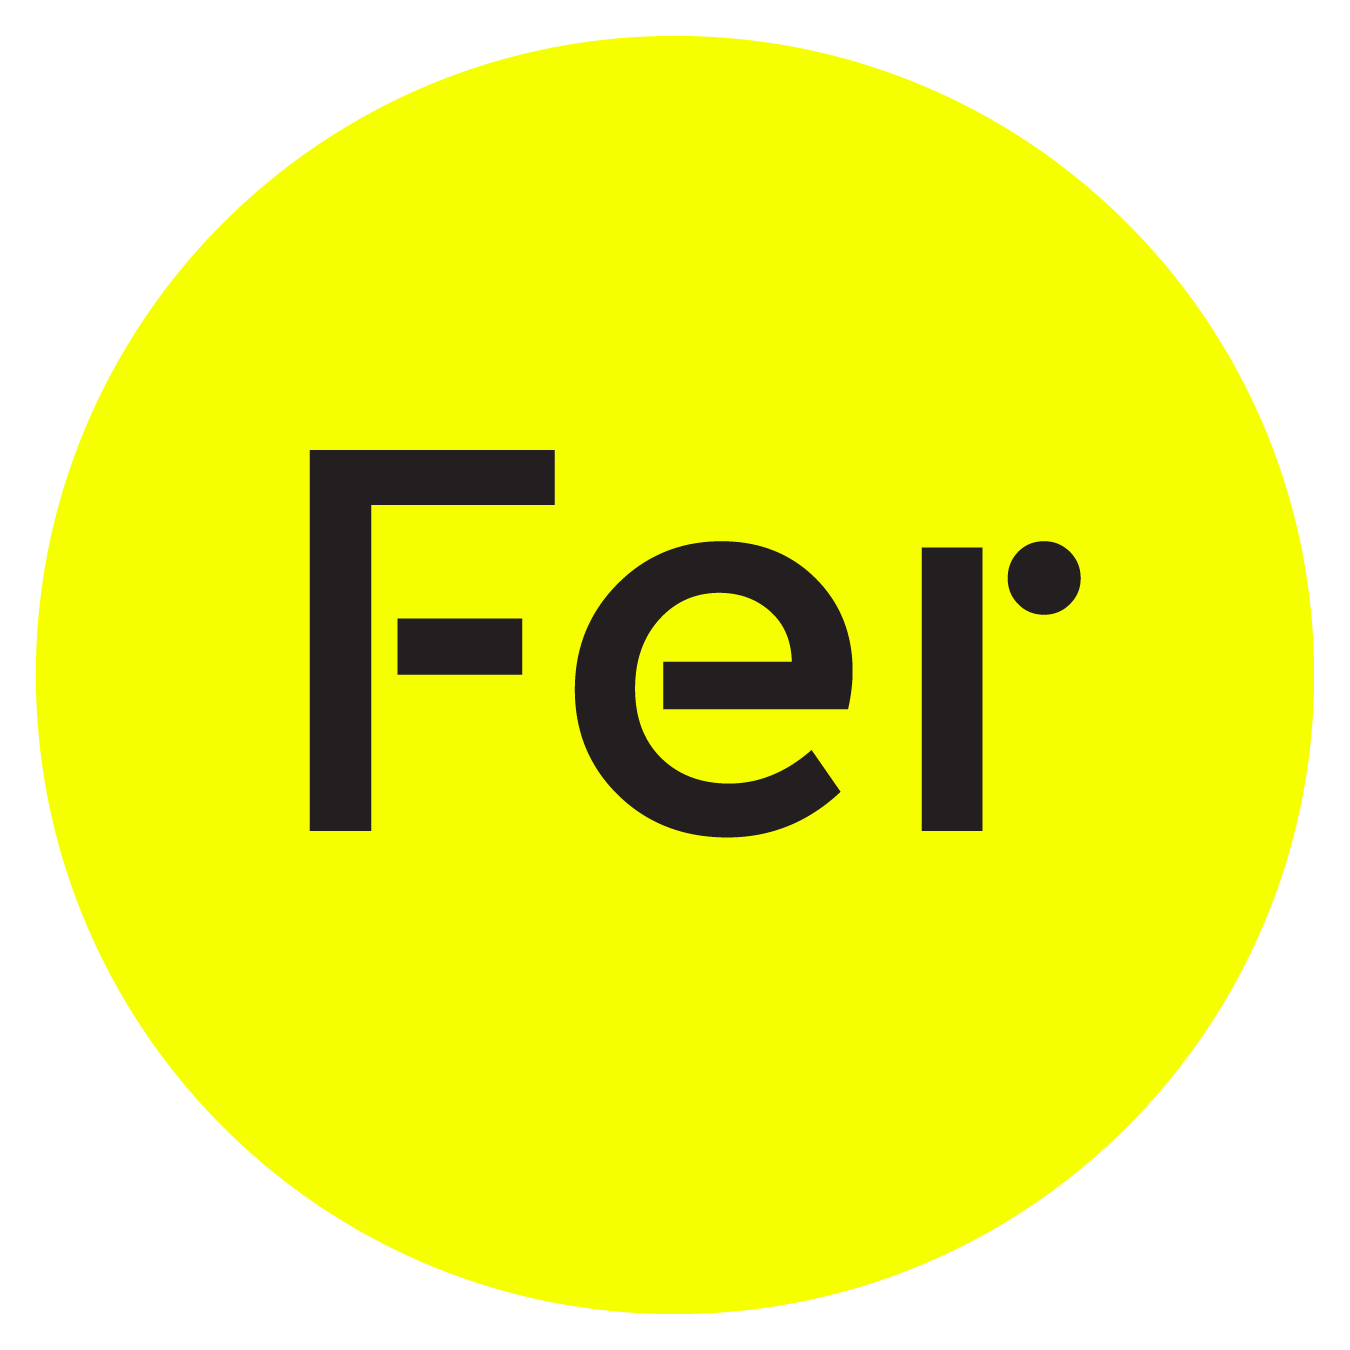 Ferulic Acid ingredient information. Find Ferulic Acid in éciat skincare